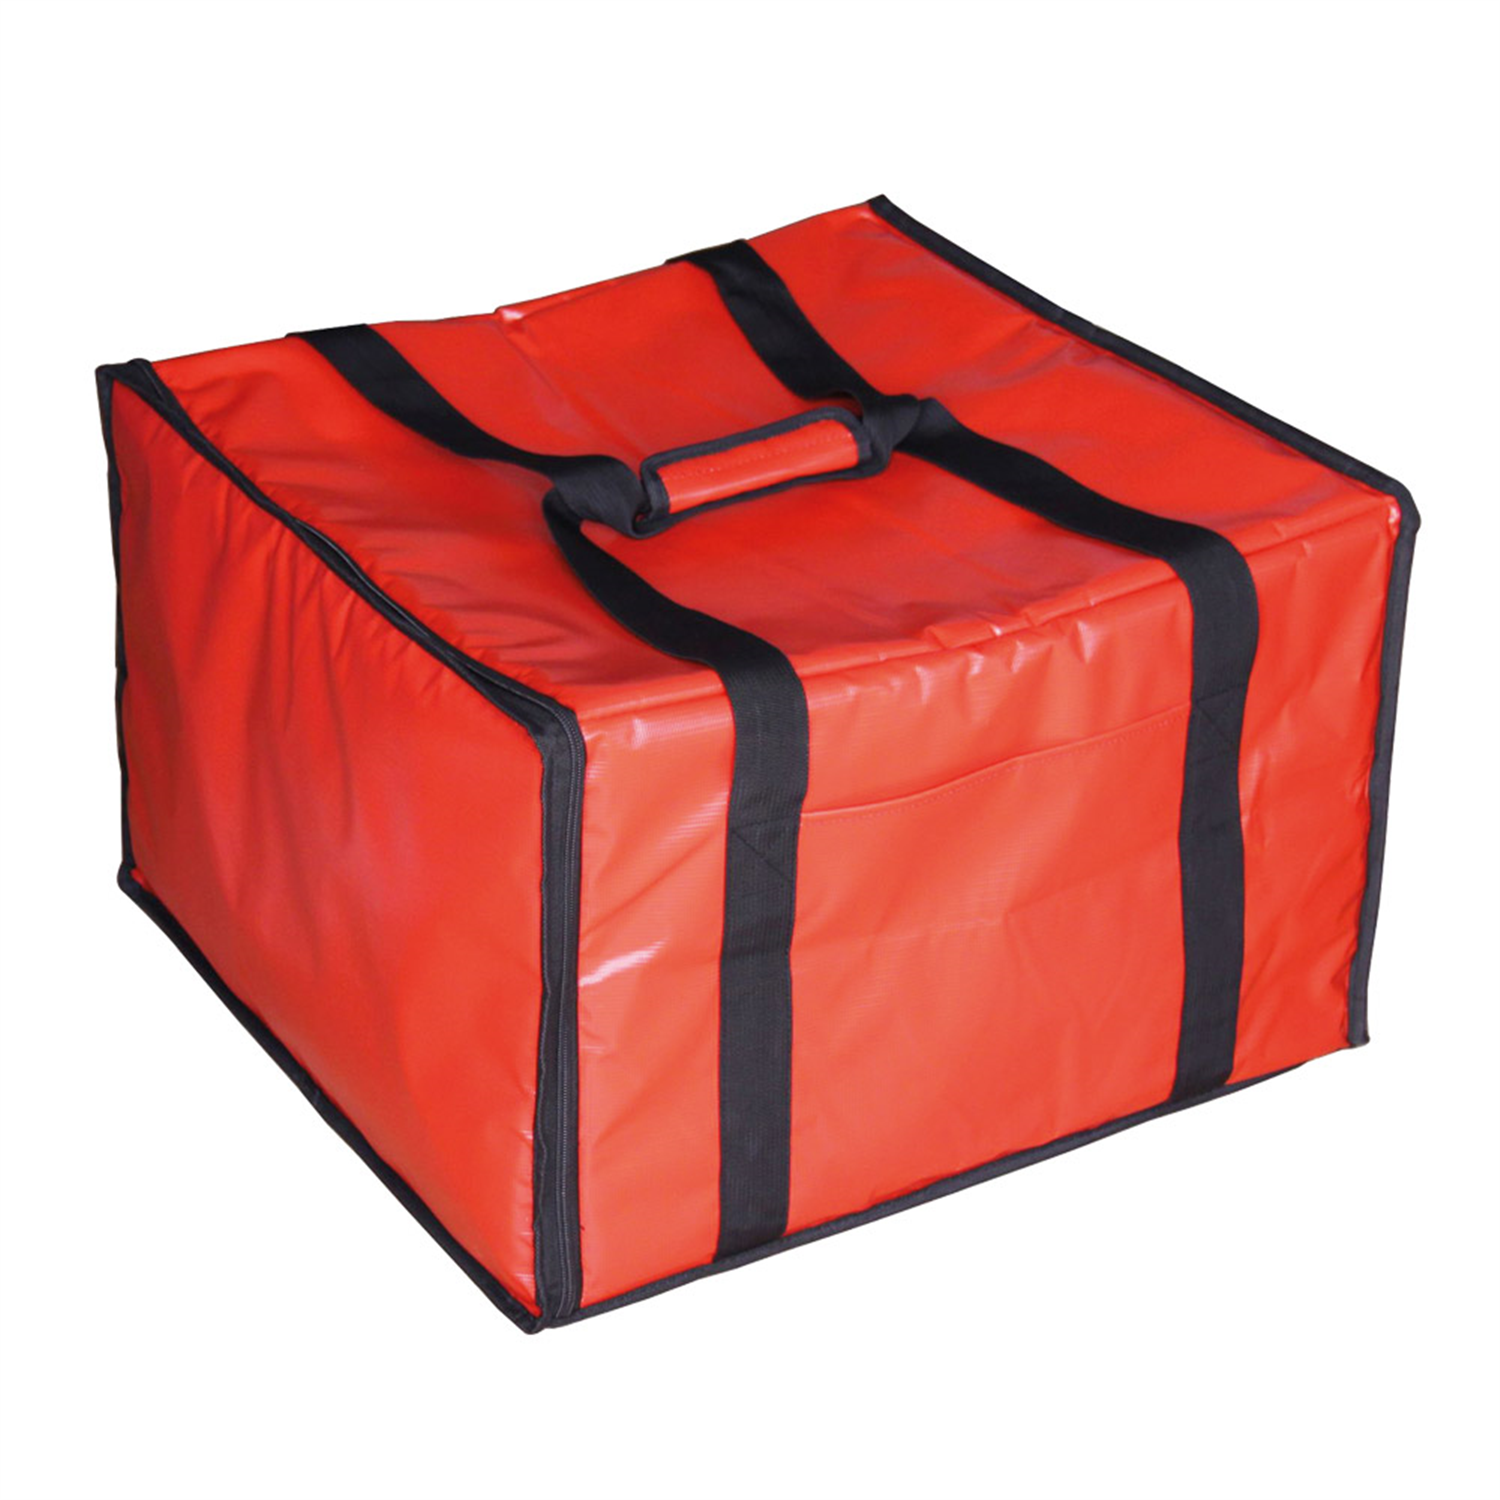 Grand sac isotherme rouge 52x48x33 cm - ProSaveurs